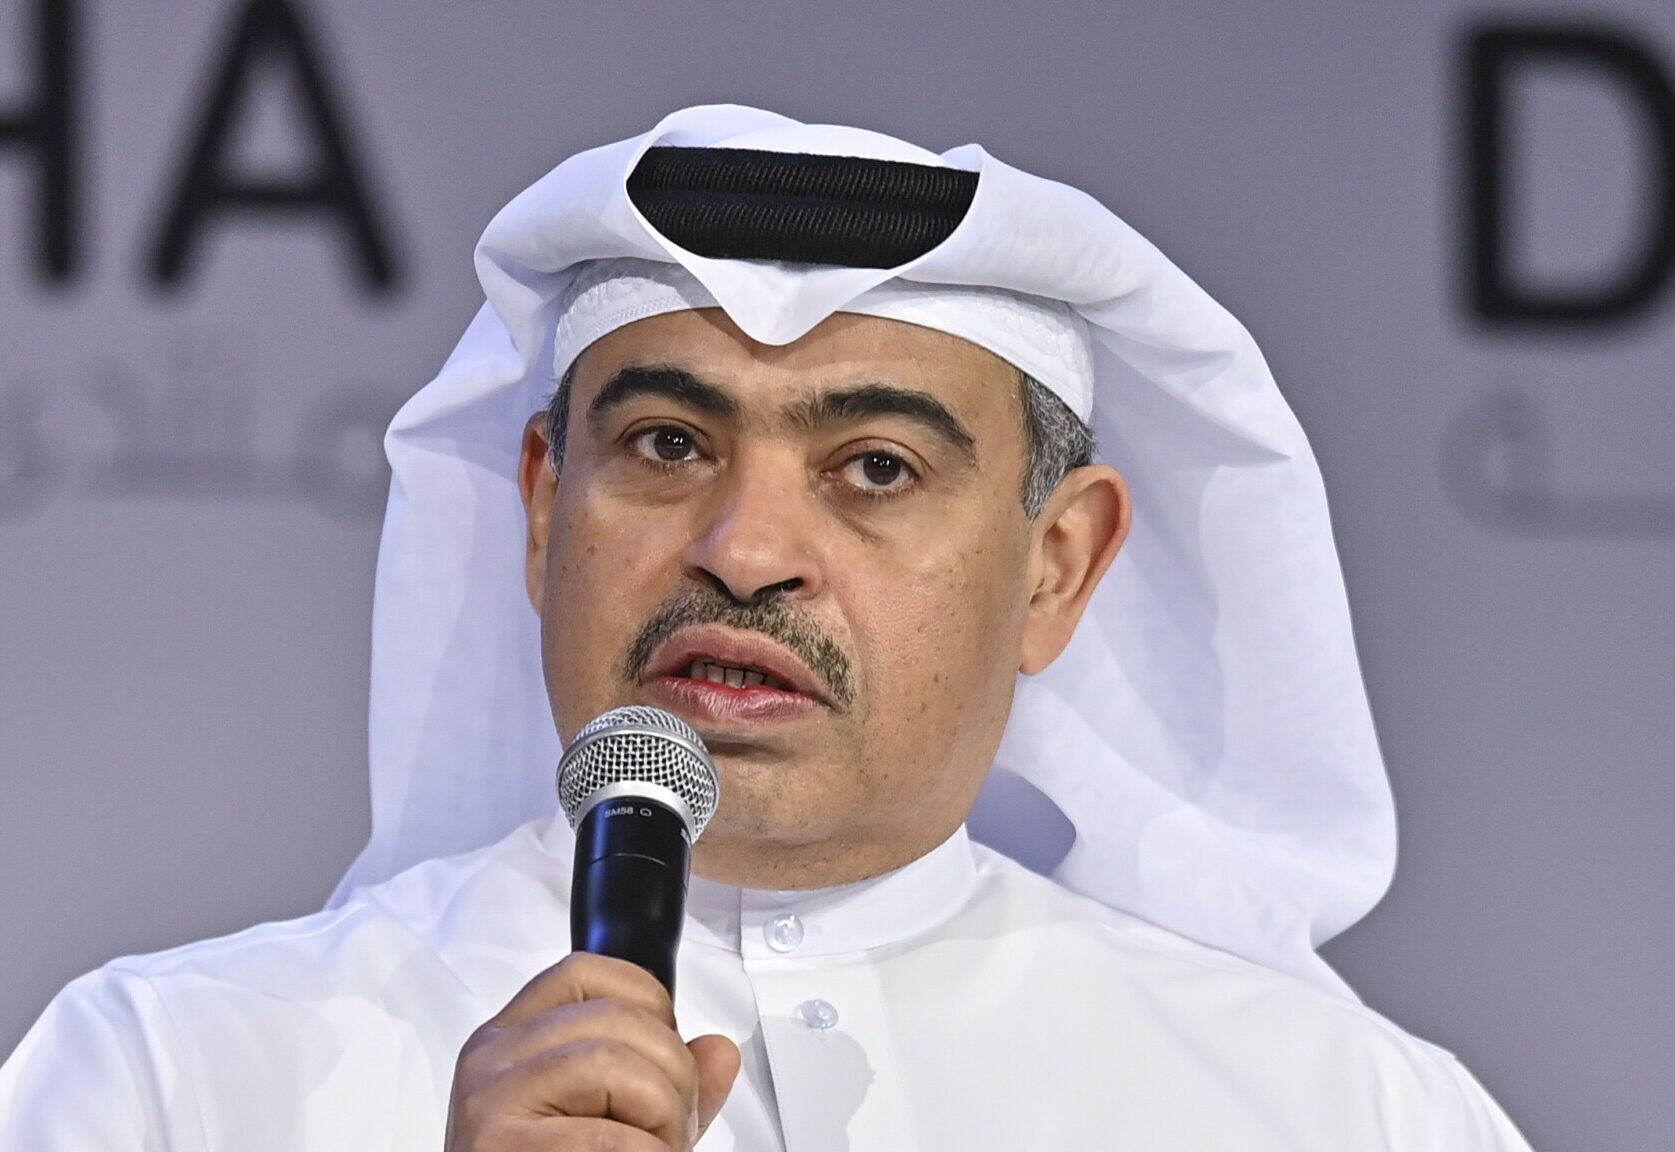 O Ali bin Ahmed Al-Kuwari © EPA/NOUSHAD THEKKAYIL